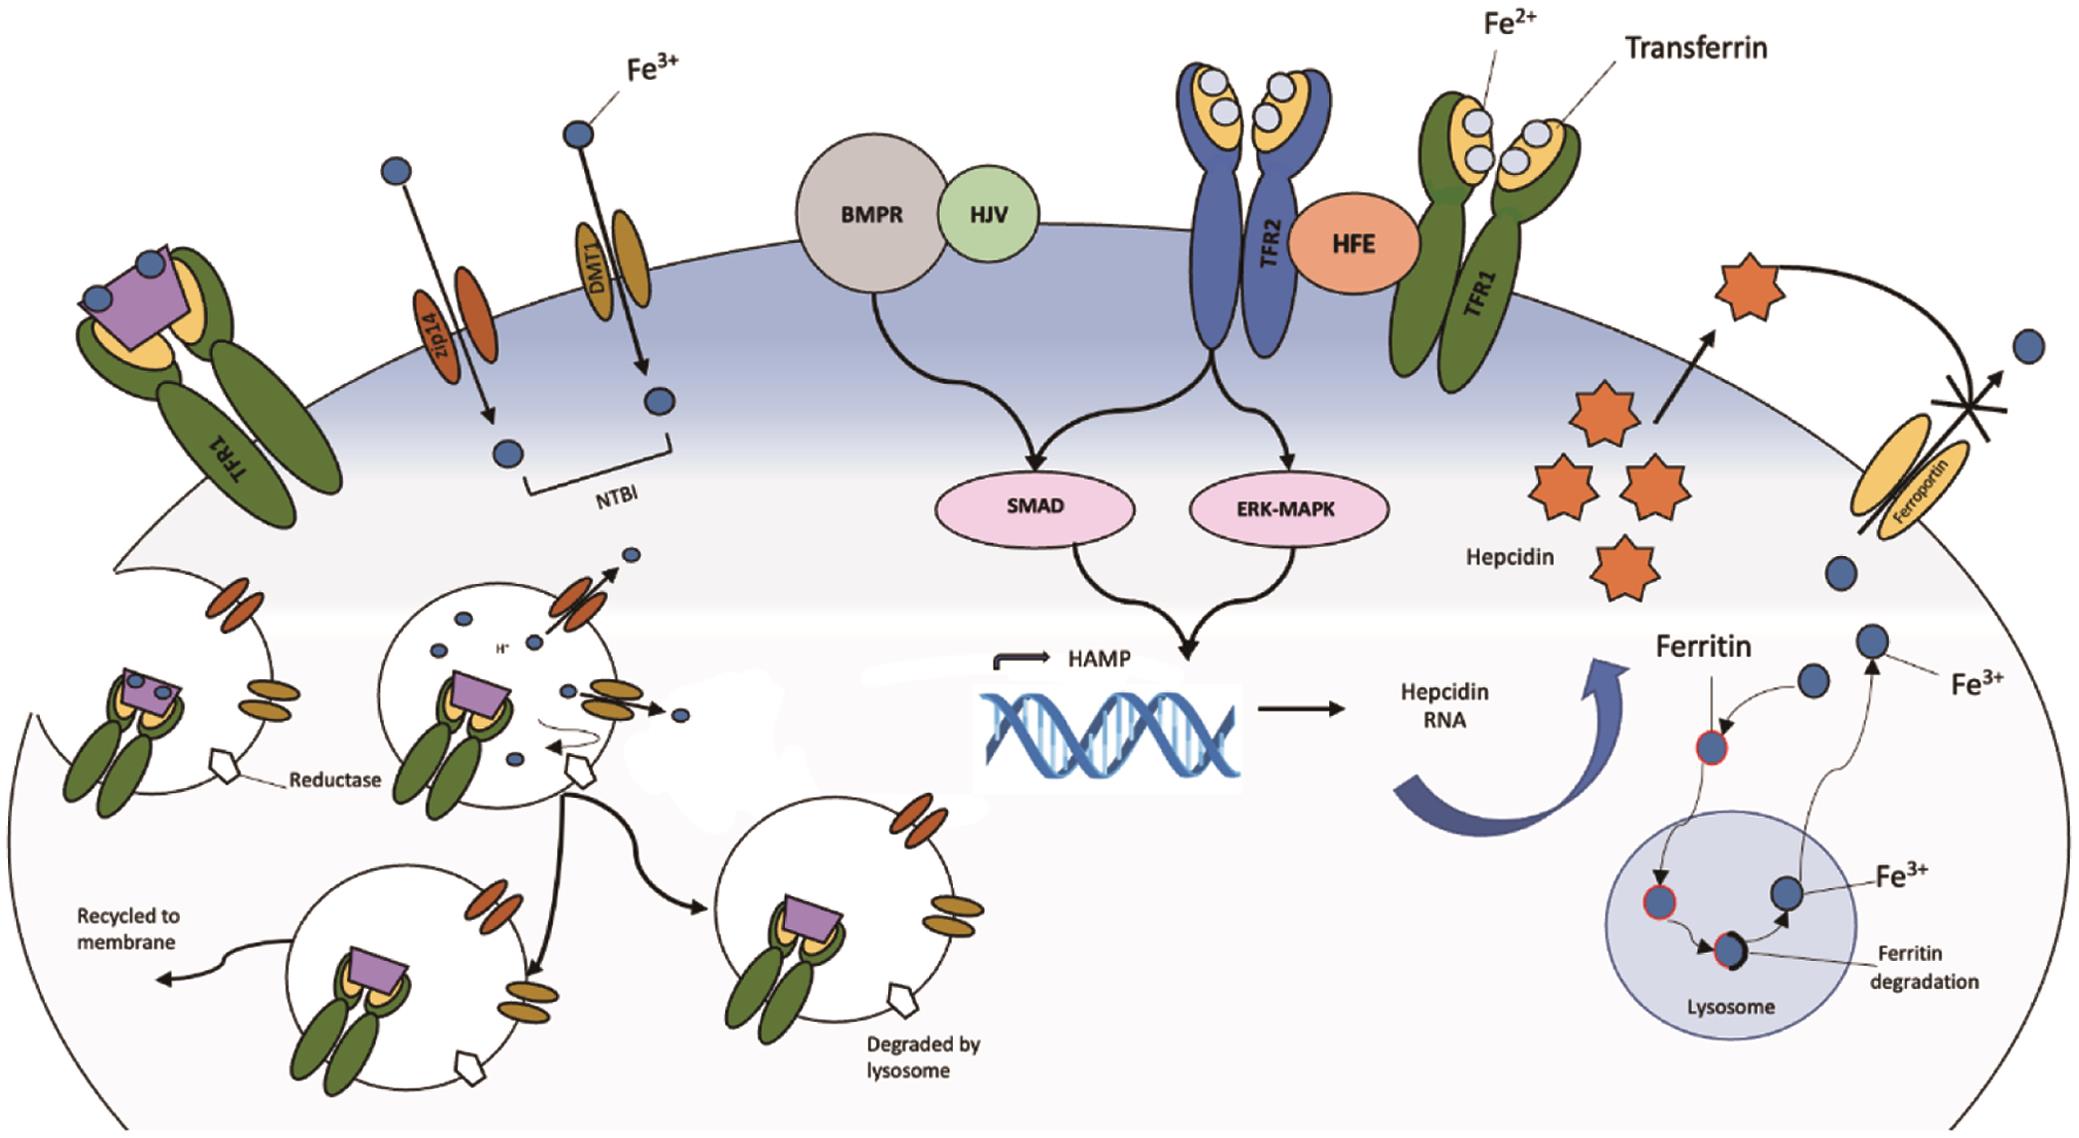 Complex pathways of iron transport regulation in hepatocytes.